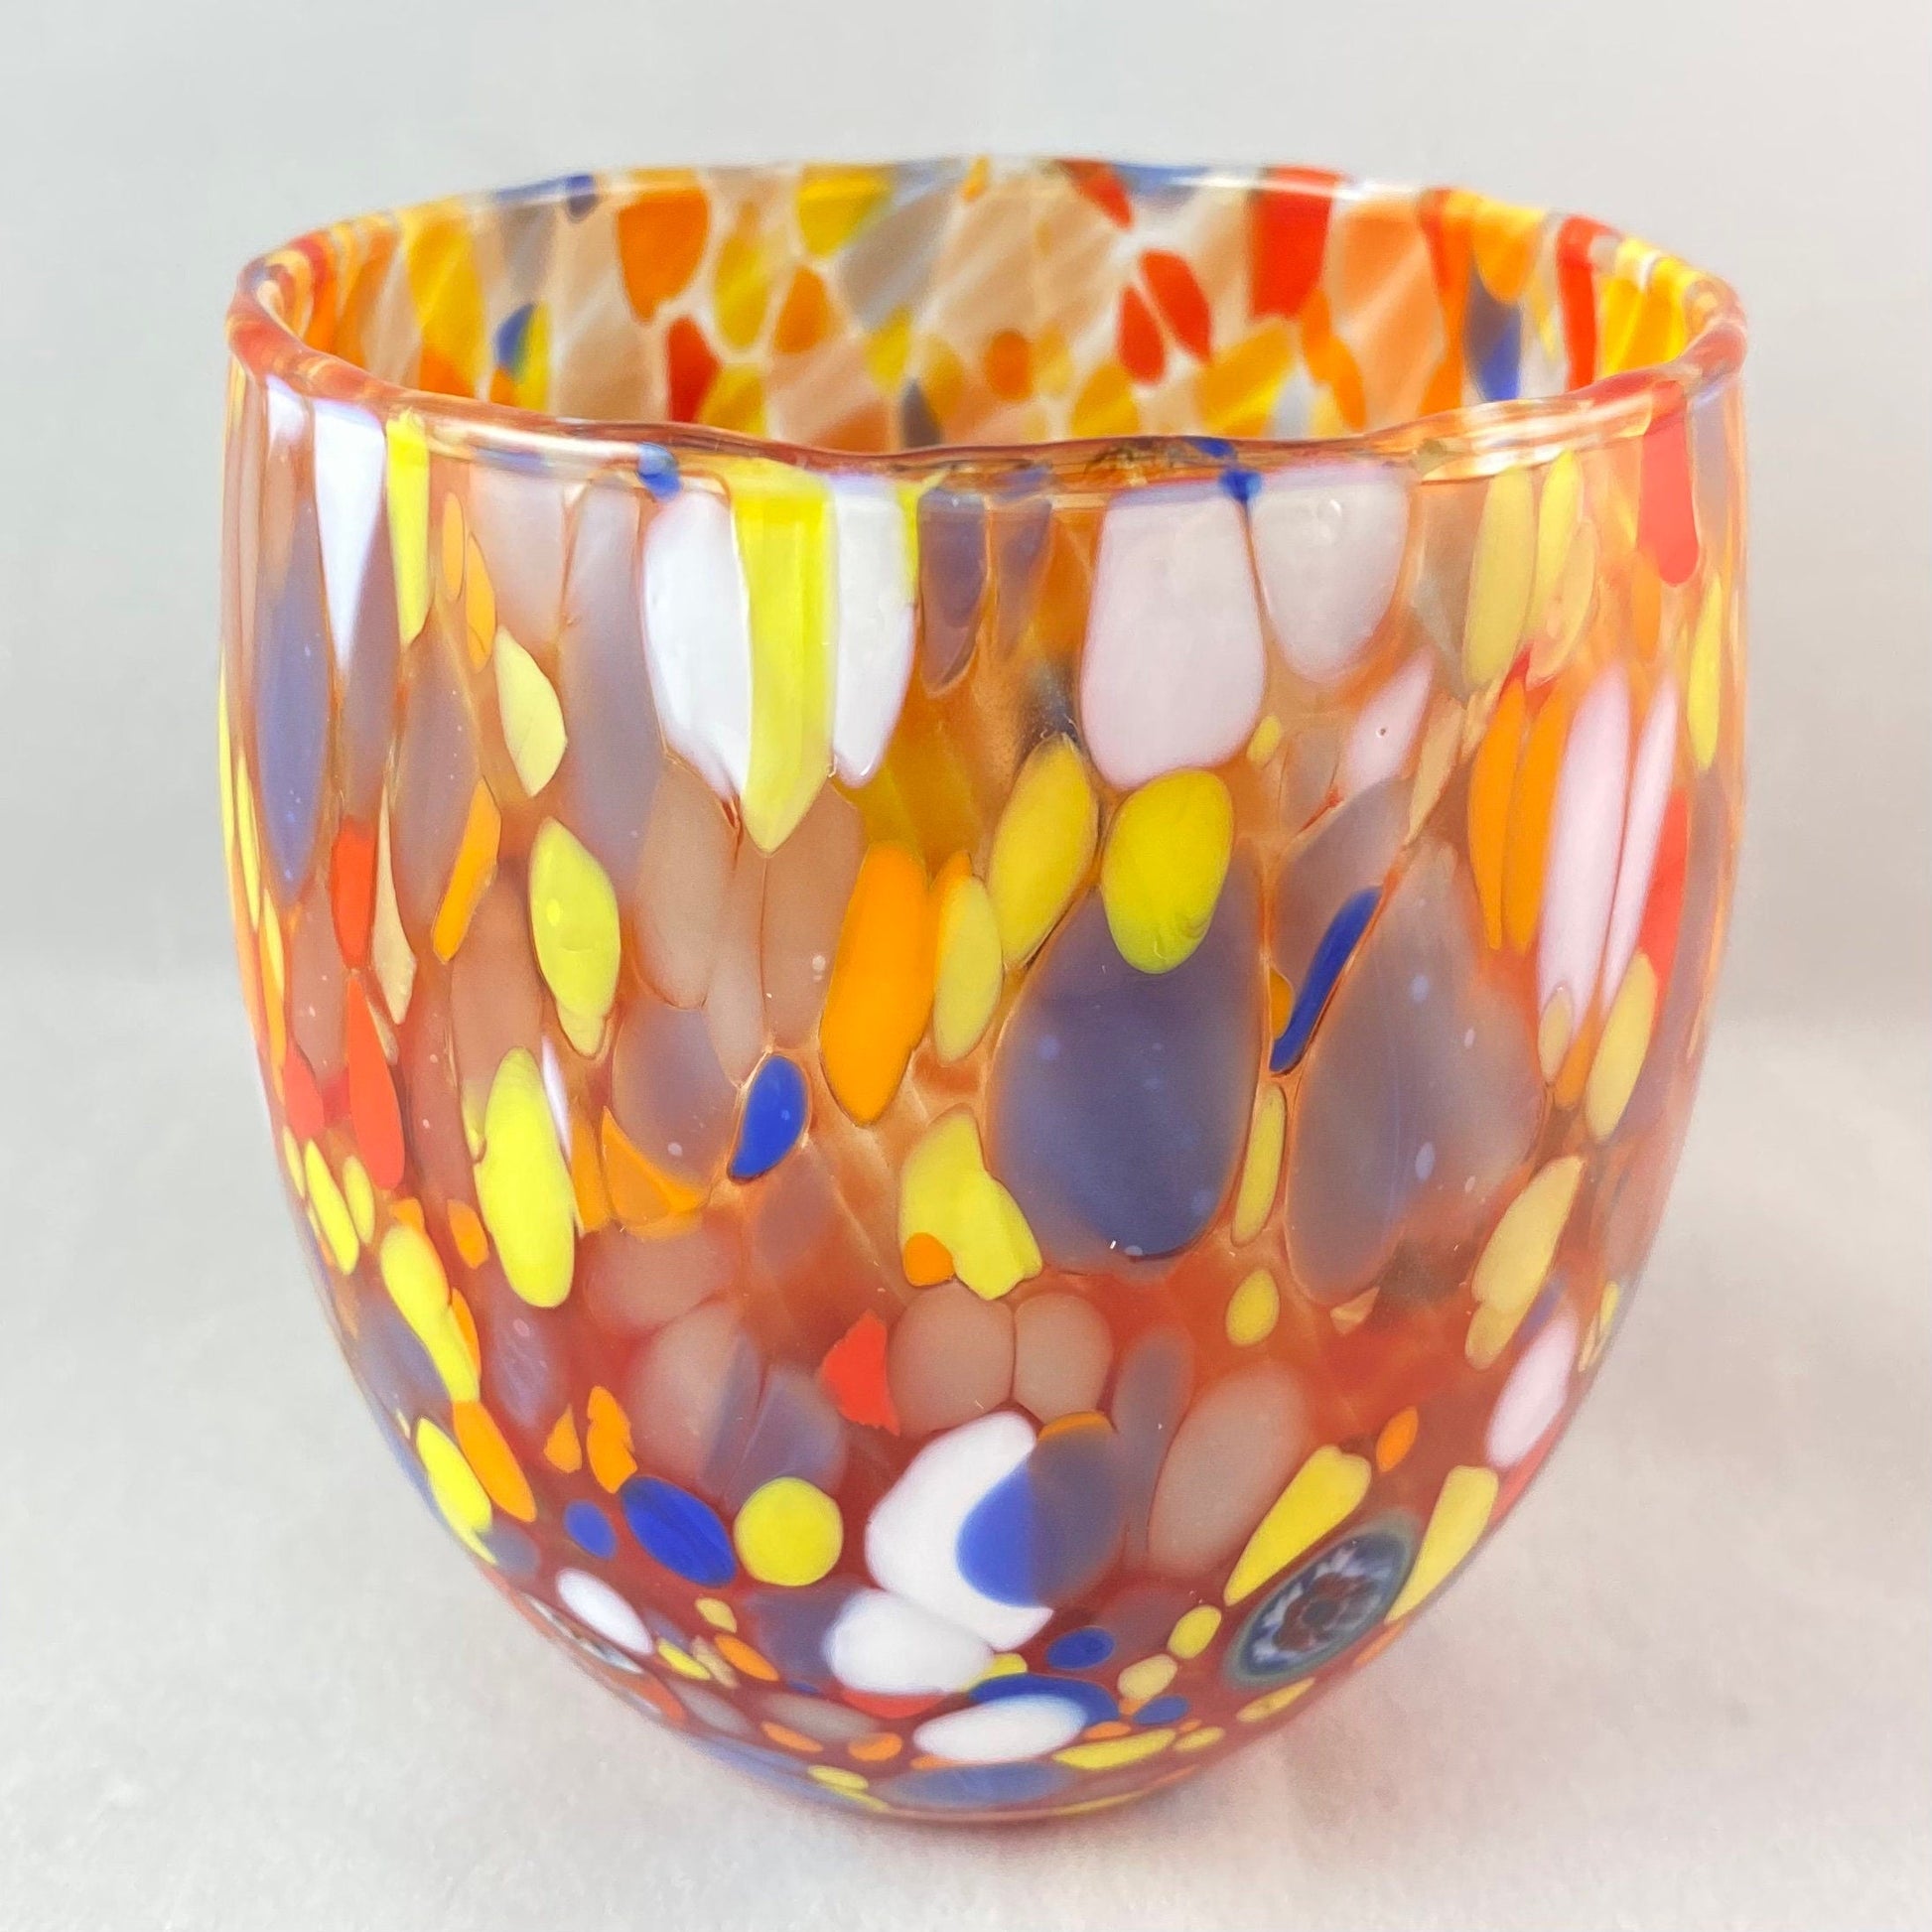 Orange Venetian Glass Stemless Wine Glass - Handmade in Italy, Colorful Murano Glass